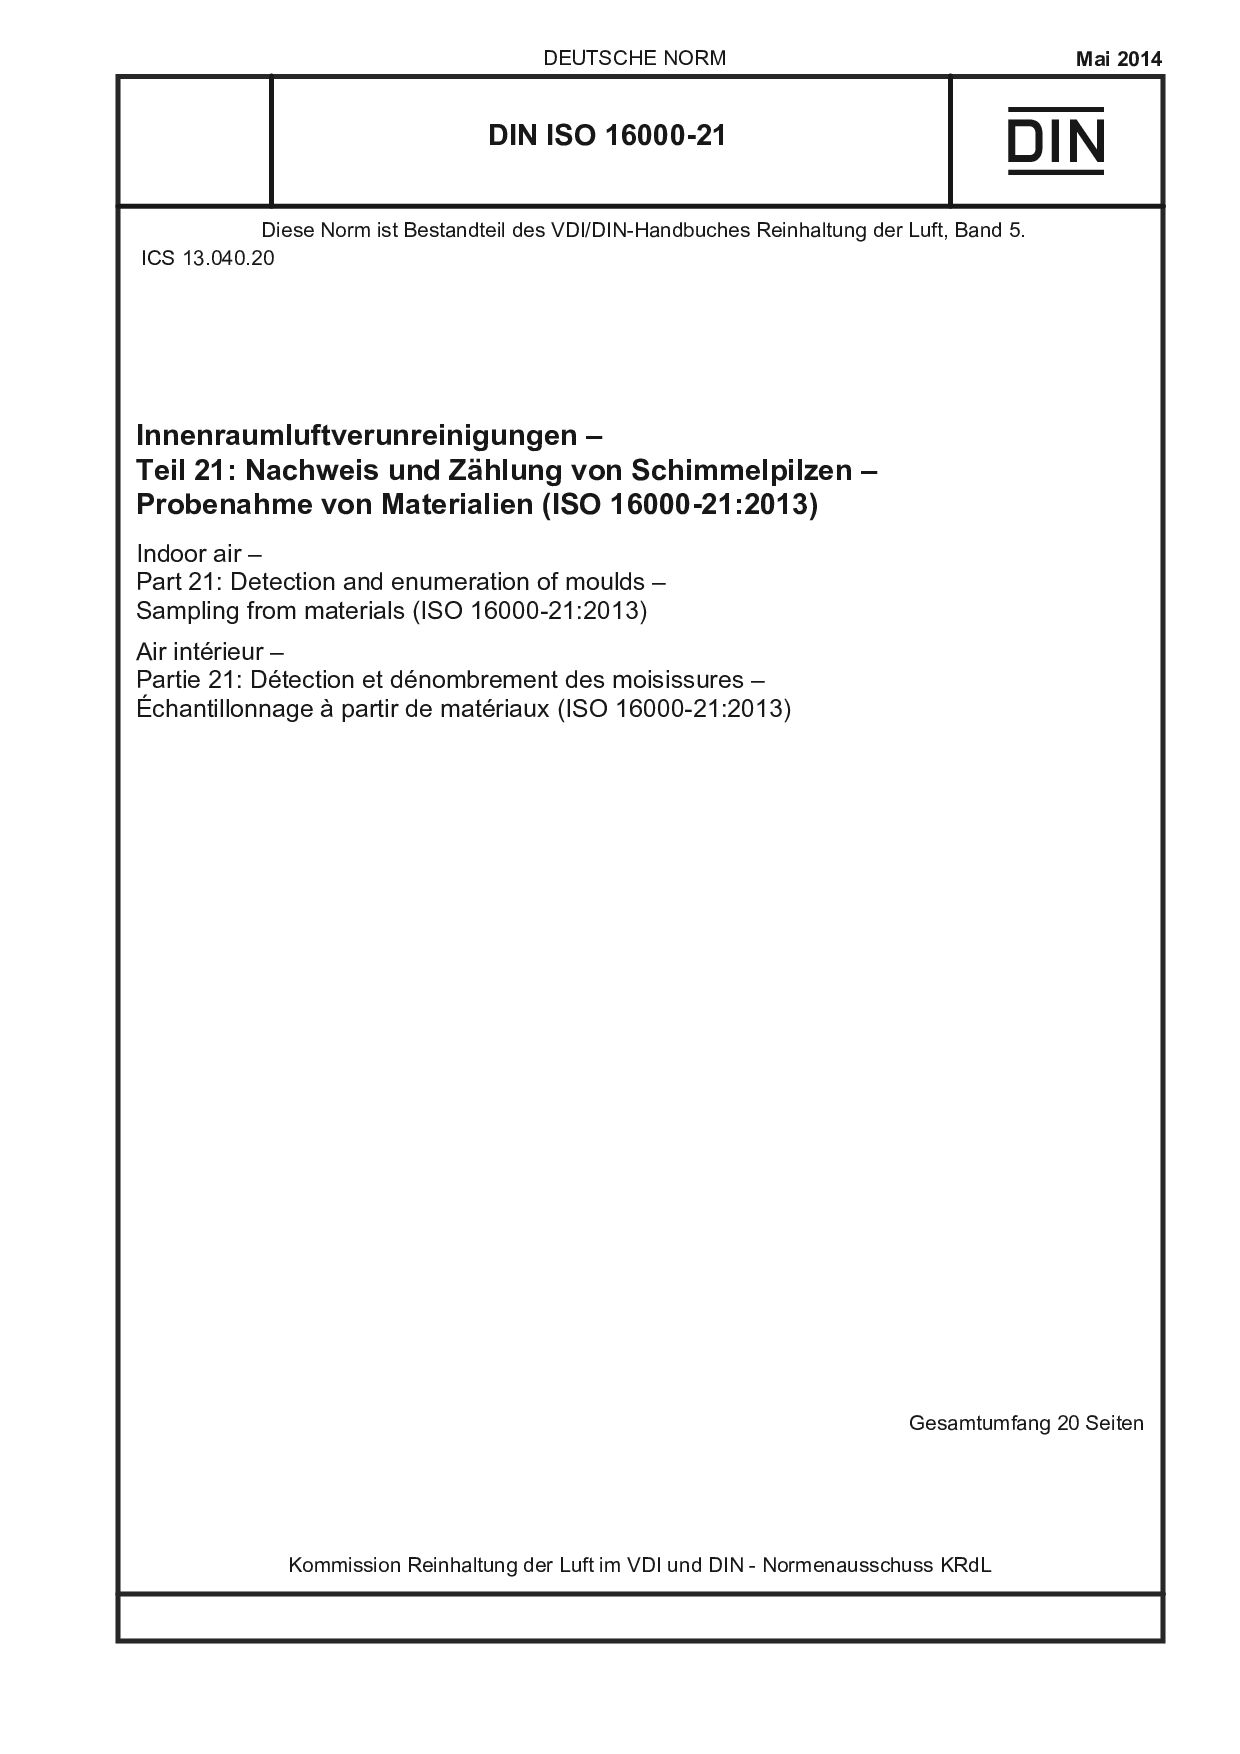 DIN ISO 16000-21:2014-05